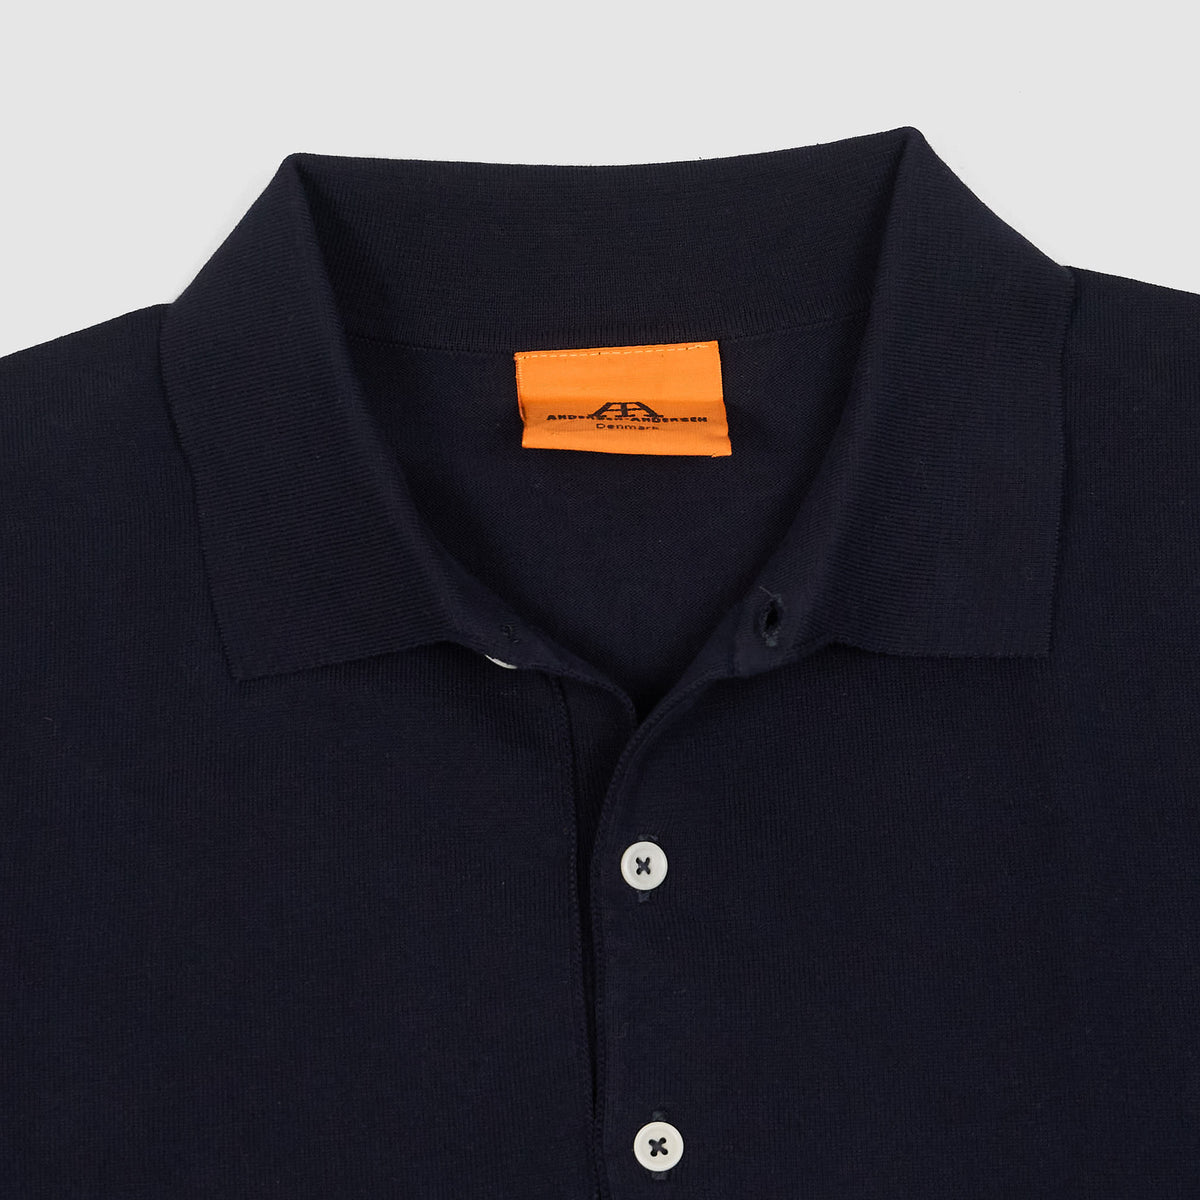 Andersen Andersen Short Sleeve Organic Cotton Polo Shirt